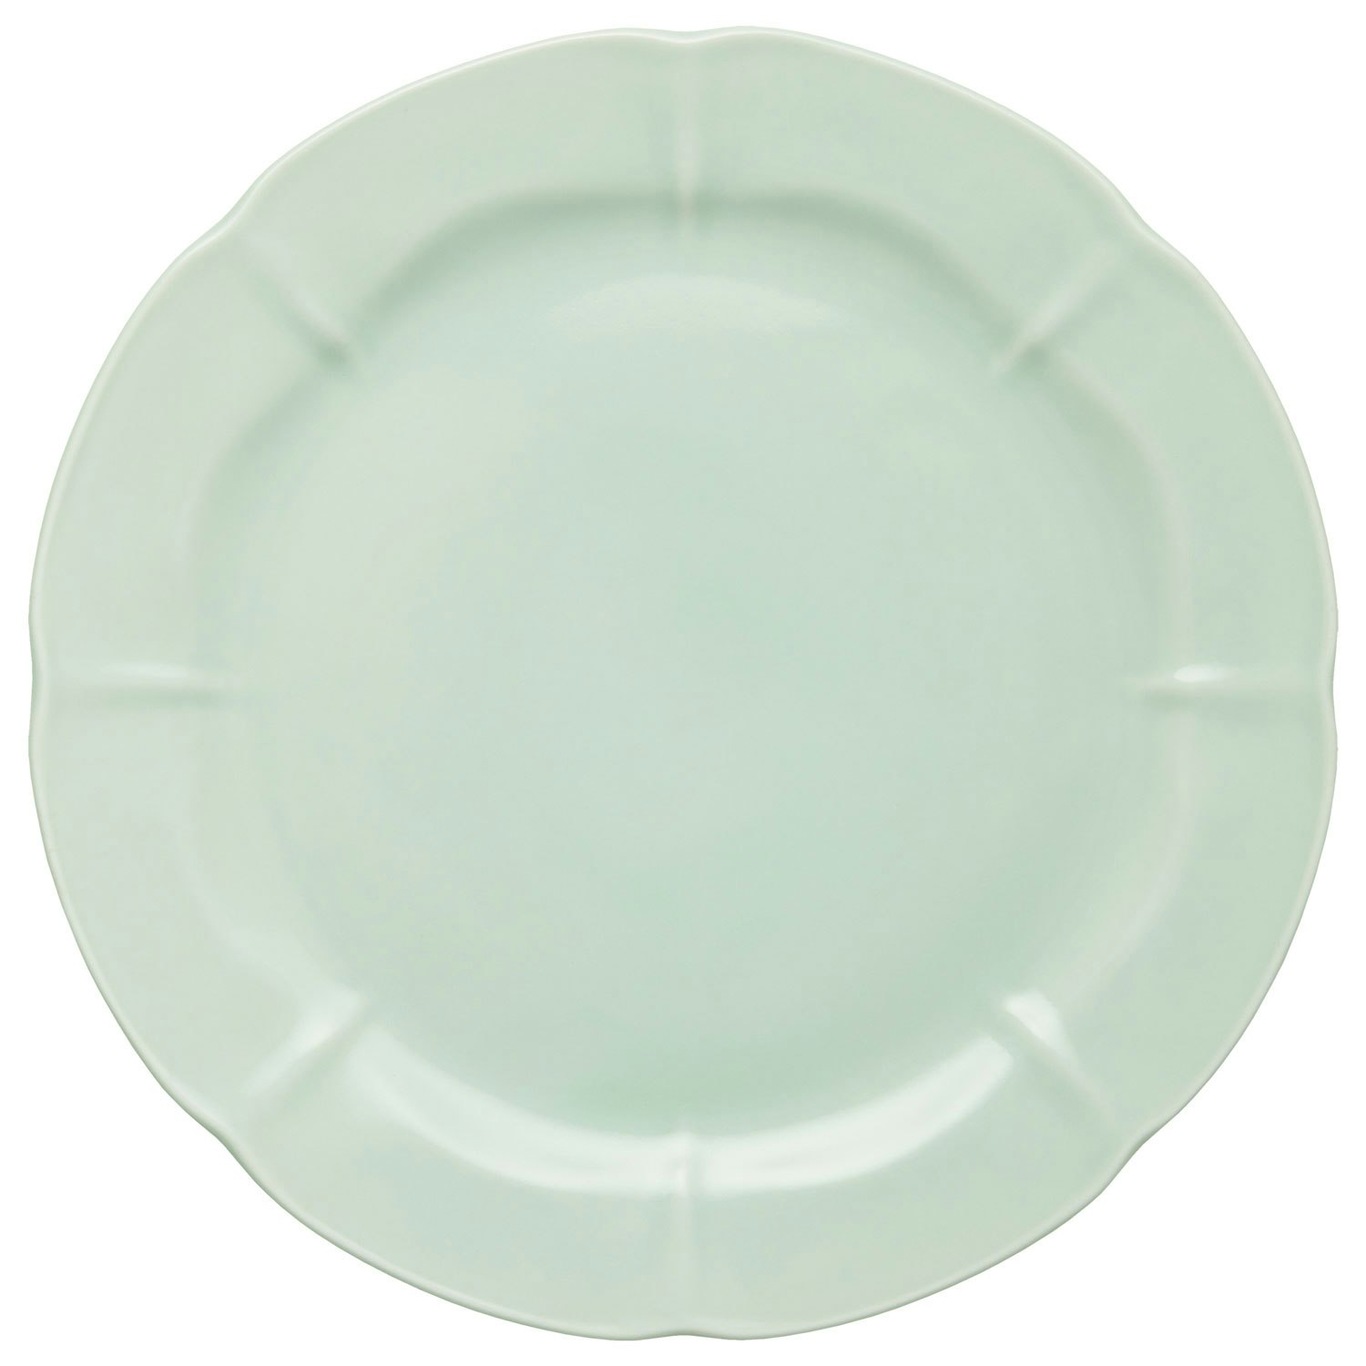 Søholm Solvej Lunch Plate 26,5 cm, Minty Green